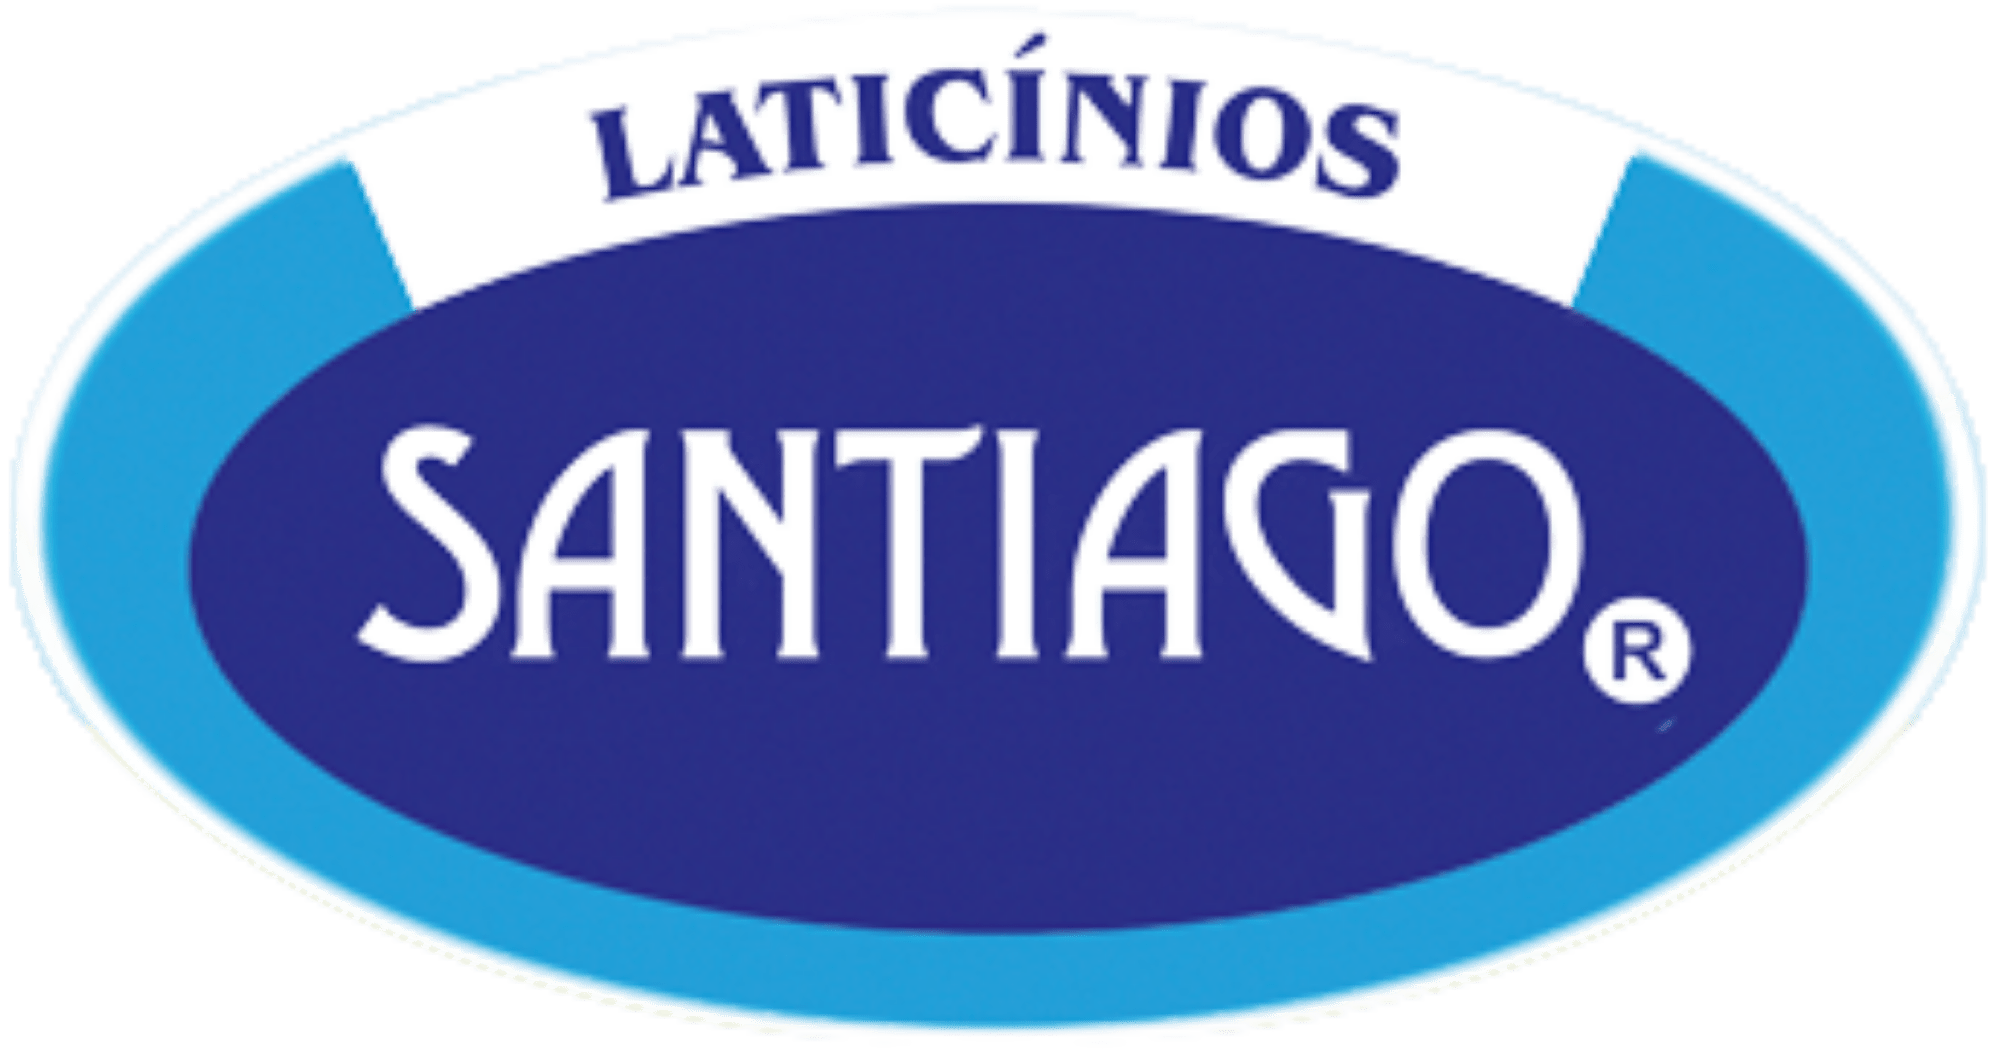 Laticinio-Santiago-min-1.png